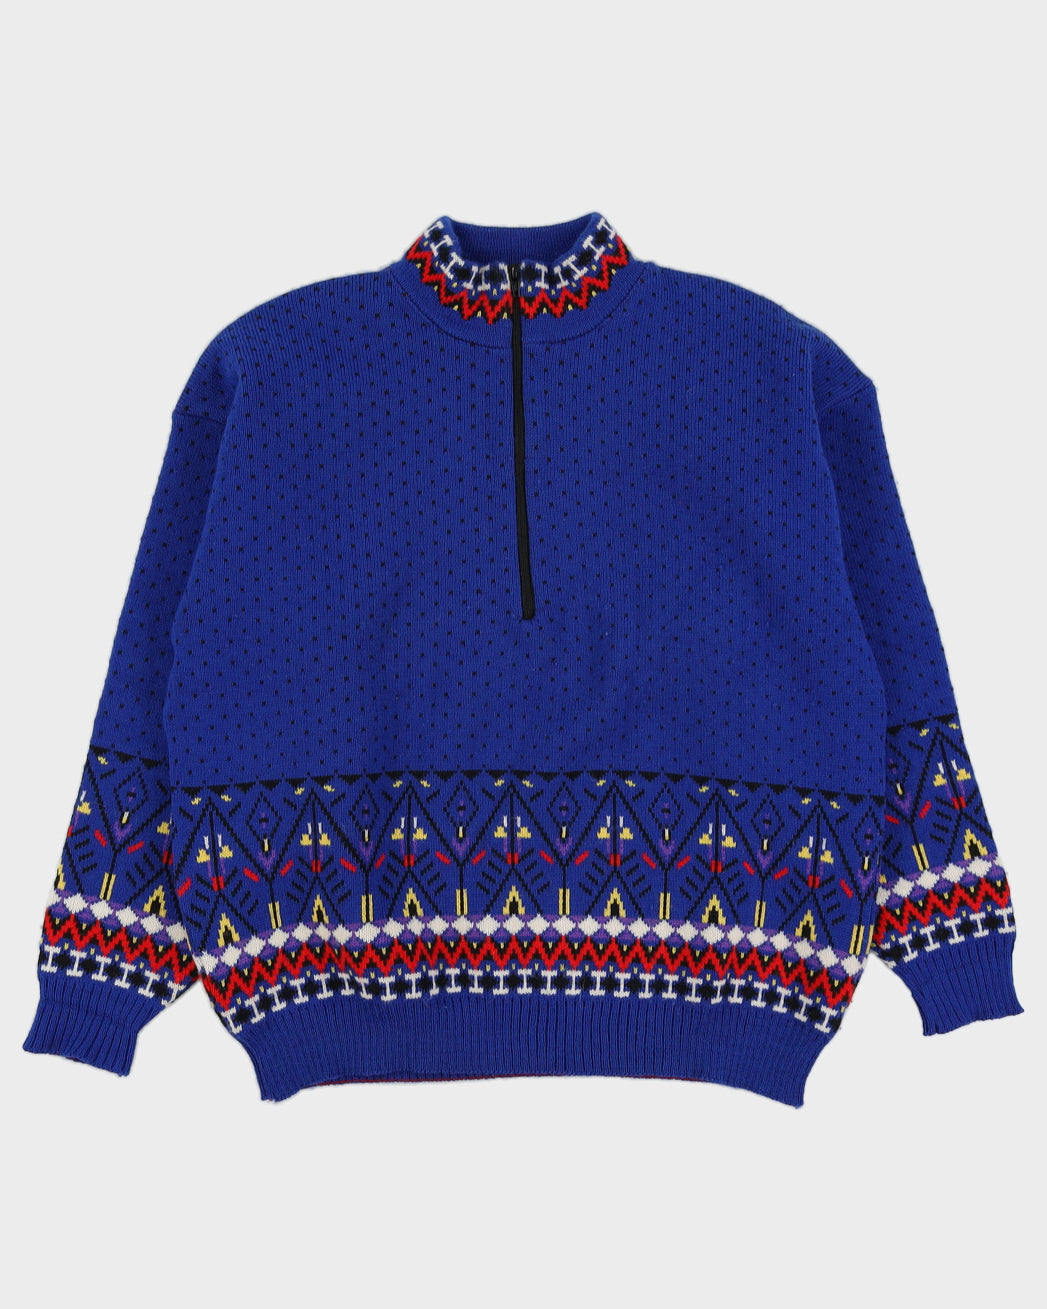 Verbier Blue Knitted Ski Jumper - XL